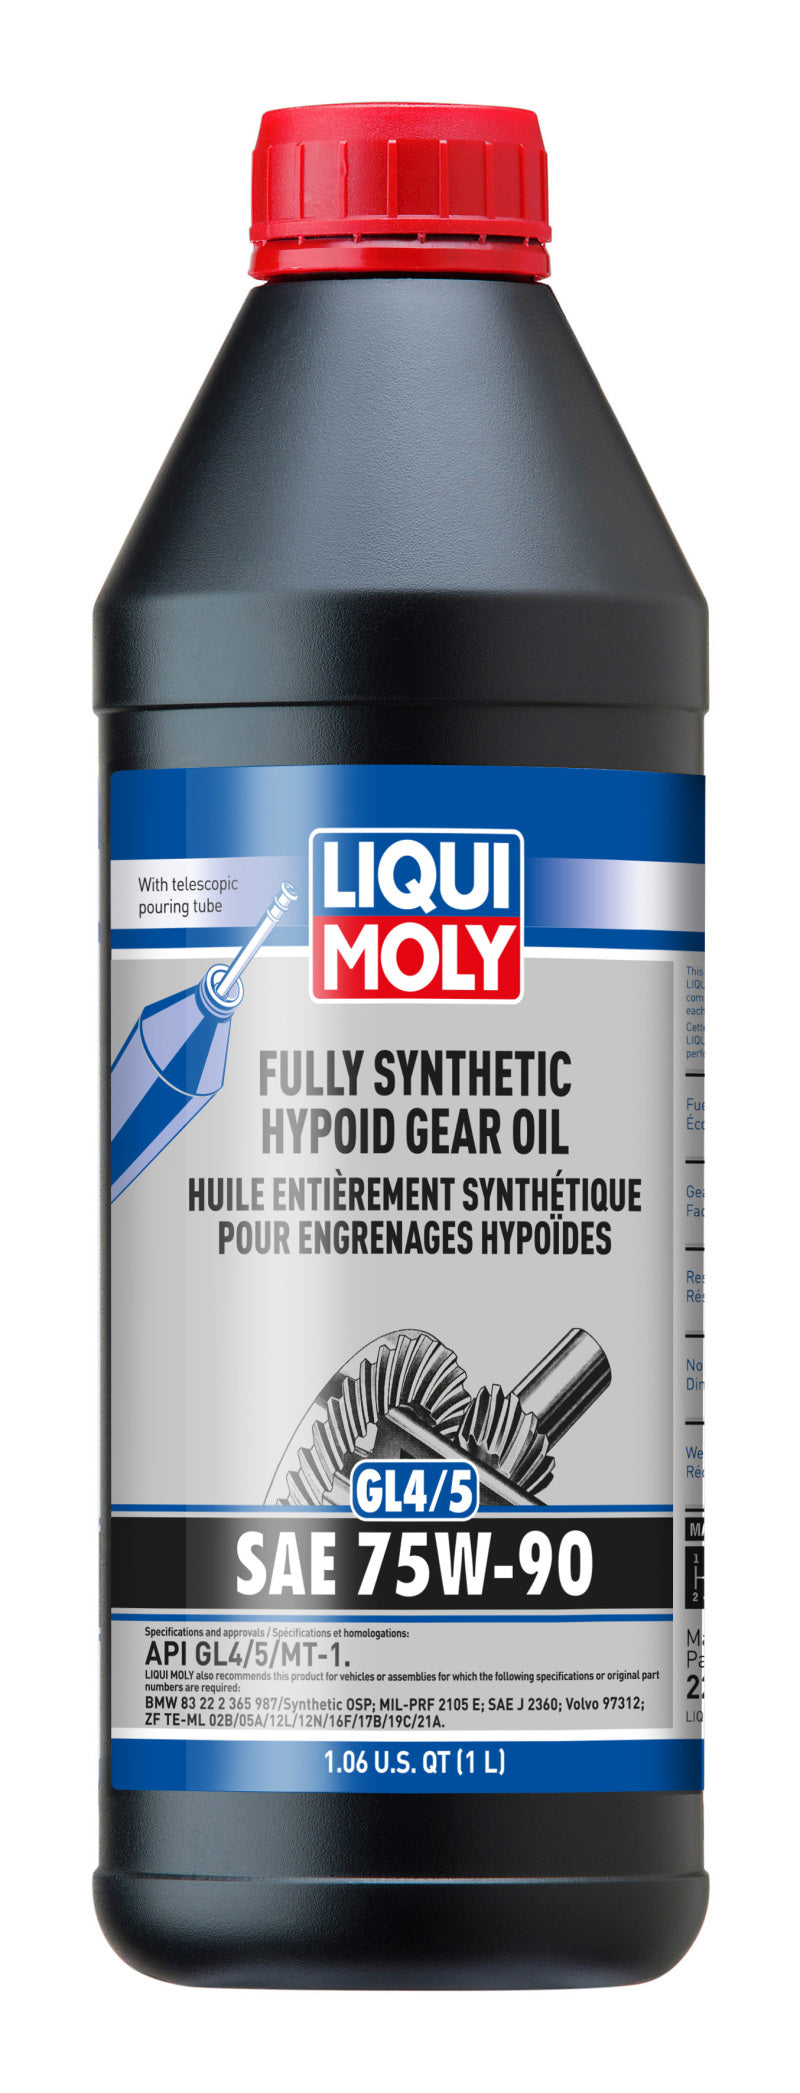 LIQUI MOLY 1L Fully Synthetic Hypoid Gear Oil (GL4/5) 75W90 - Single